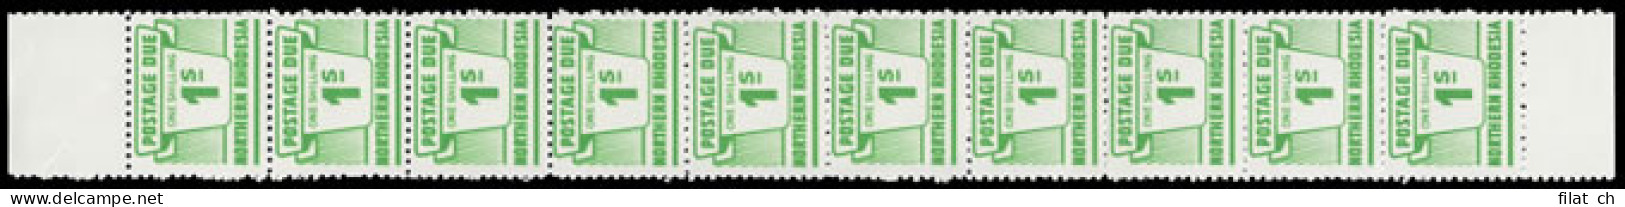 Northern Rhodesia 1963 Postage Due 1/- Double Print Strip - Northern Rhodesia (...-1963)